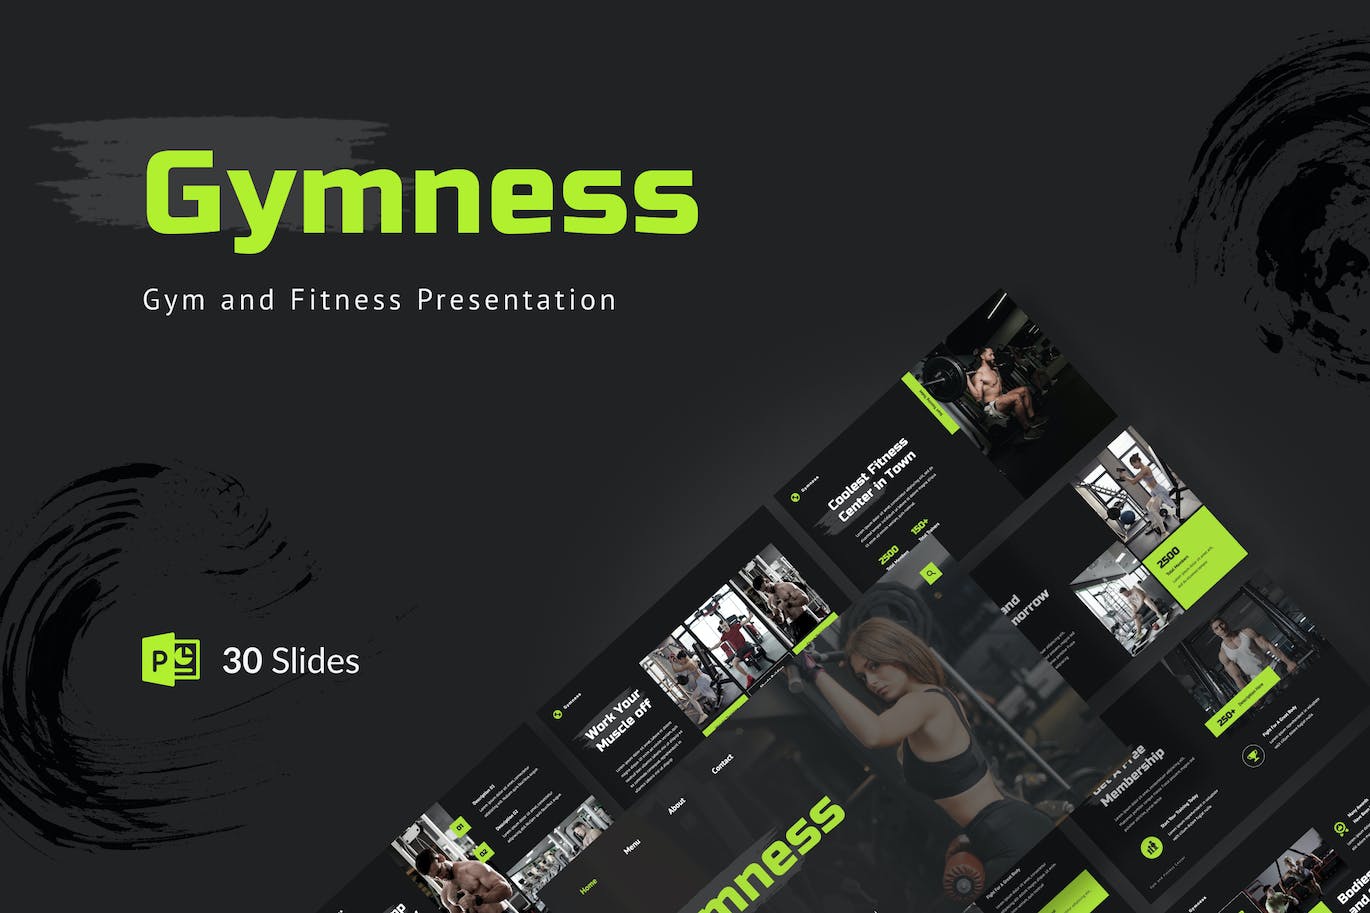 健身房和健身Powerpoint模板下载 Gymness – Gym and Fitness PowerPoint Template 幻灯图表 第1张